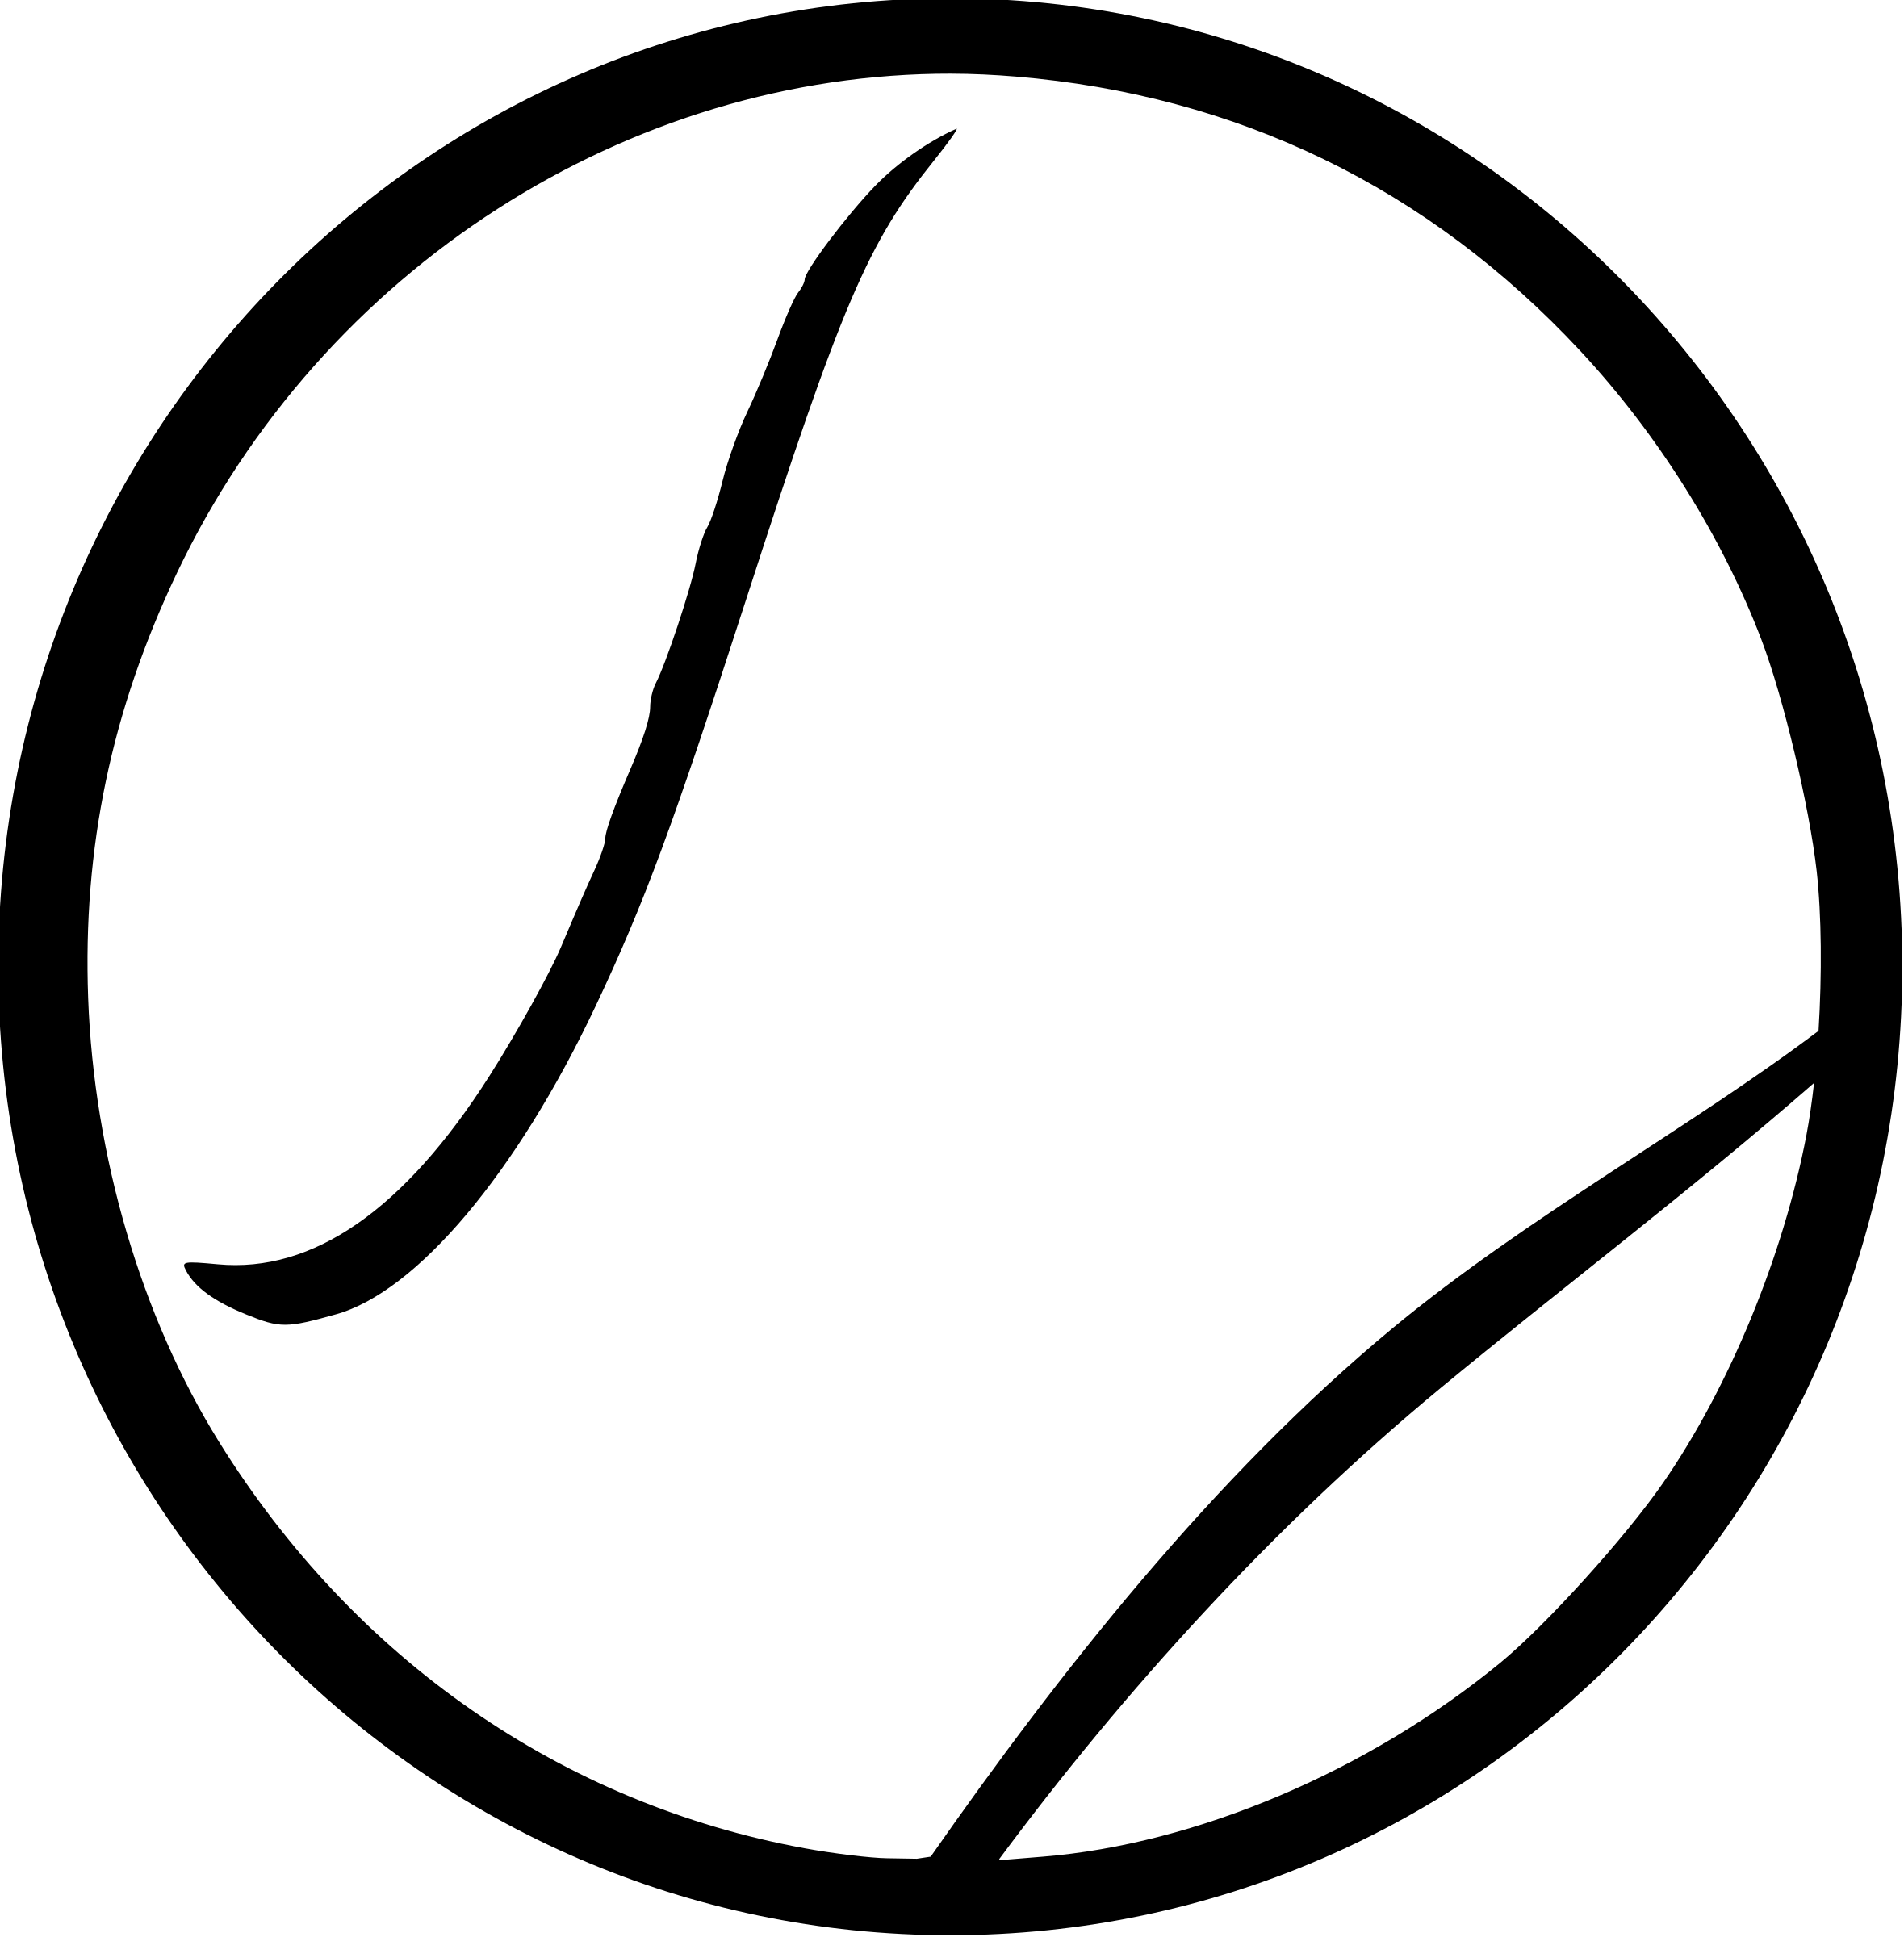 Clipart - Tennis ball